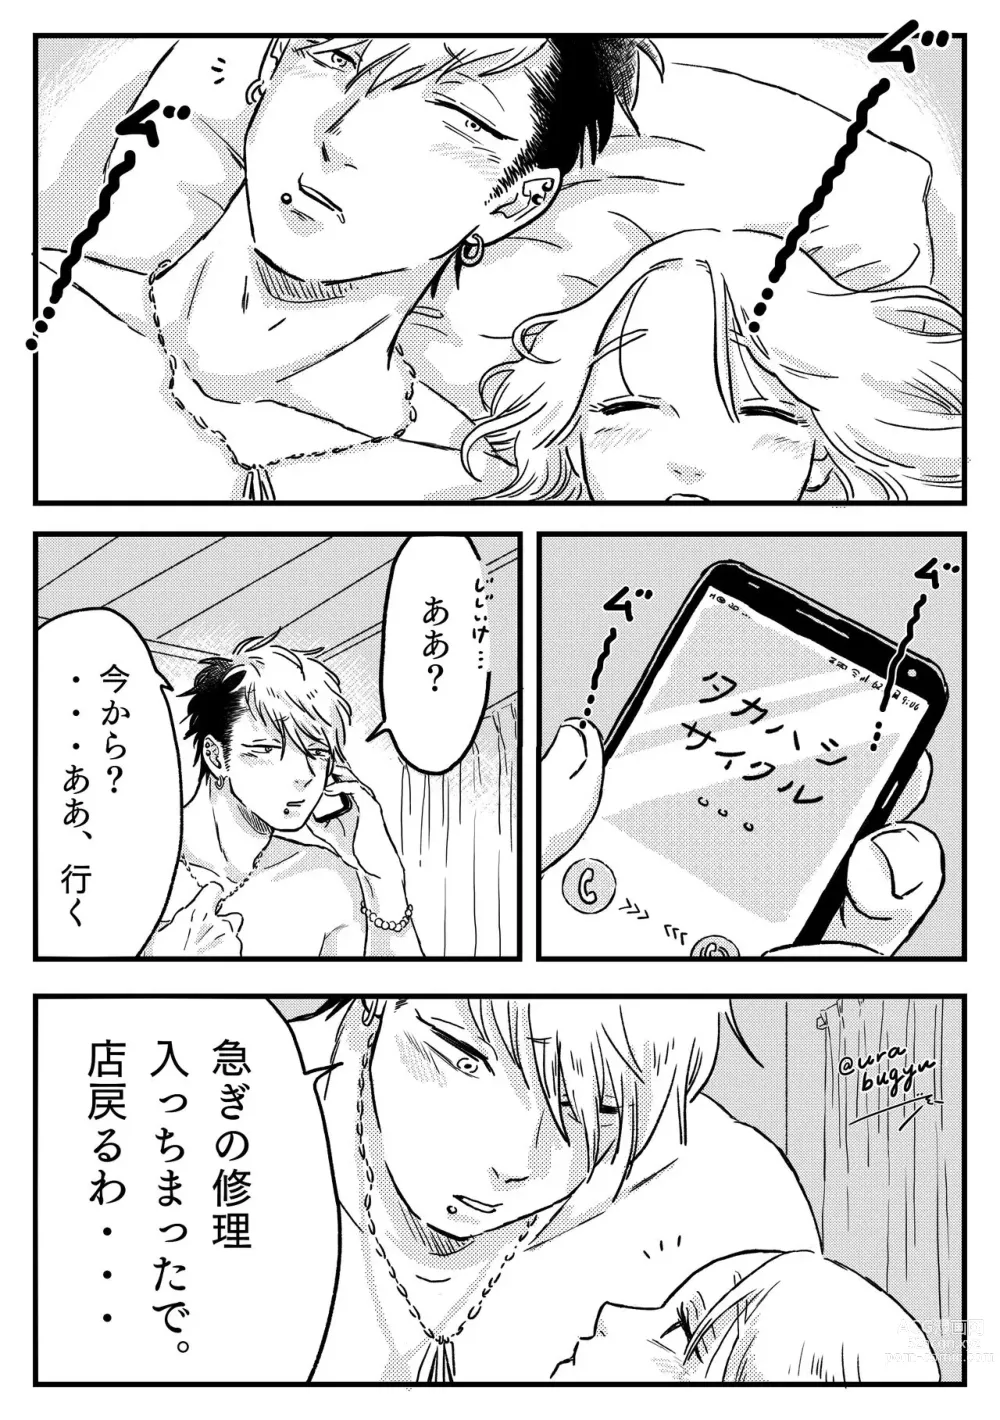 Page 8 of doujinshi Ryoutomo